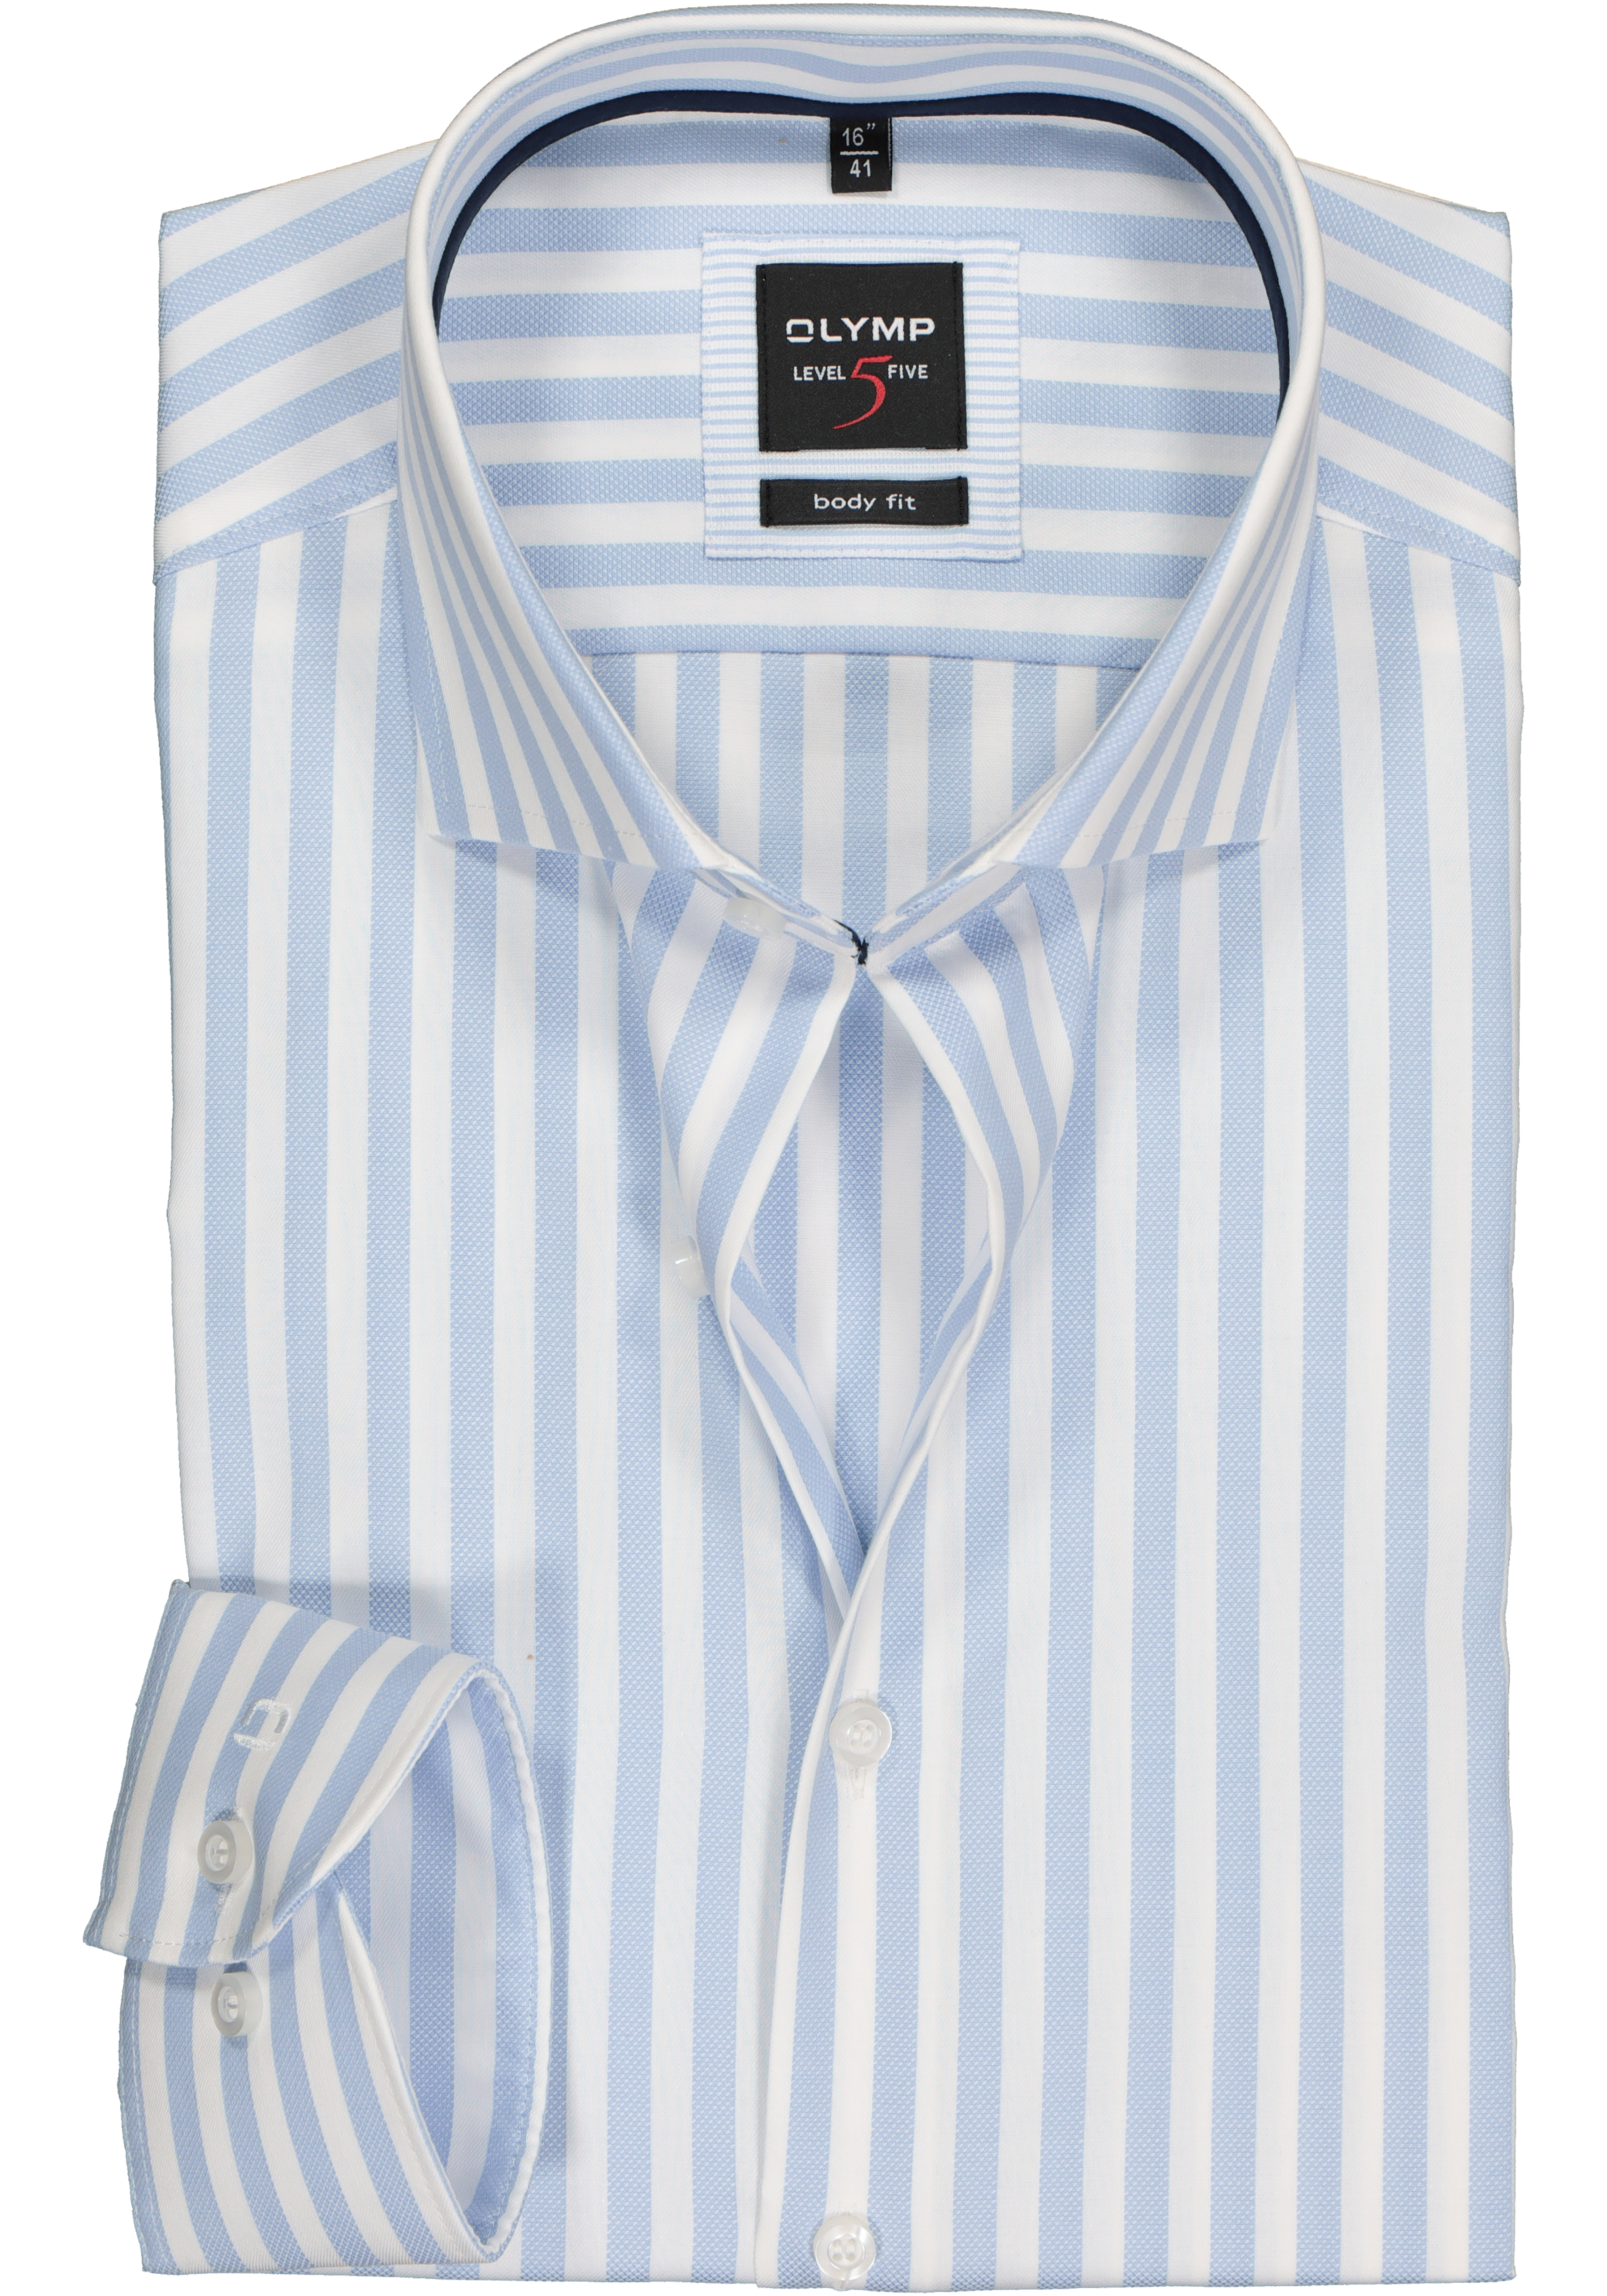 OLYMP Level 5 body fit overhemd, lichtblauw met wit gestreept